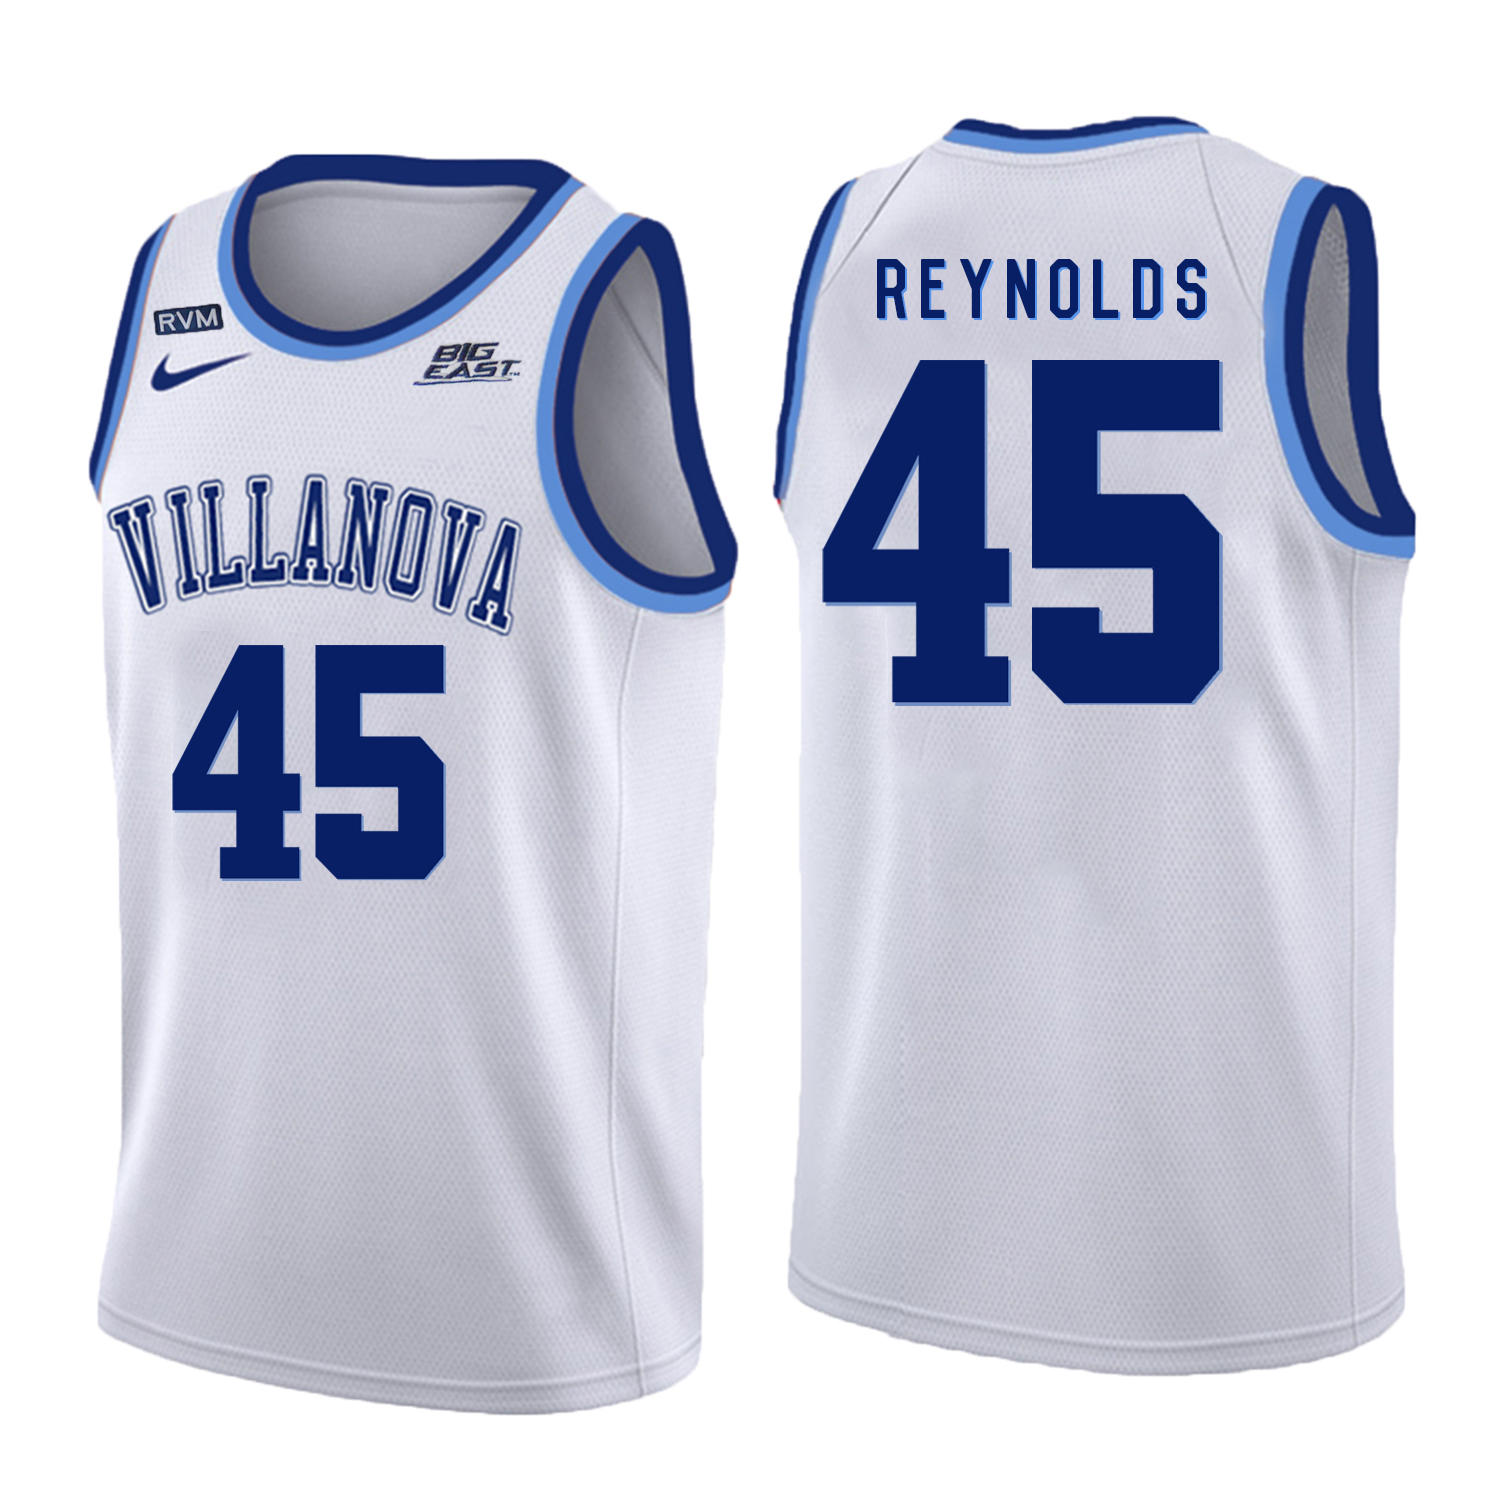 Villanova Wildcats 45 Darryl Reynolds White College Basketball Jersey